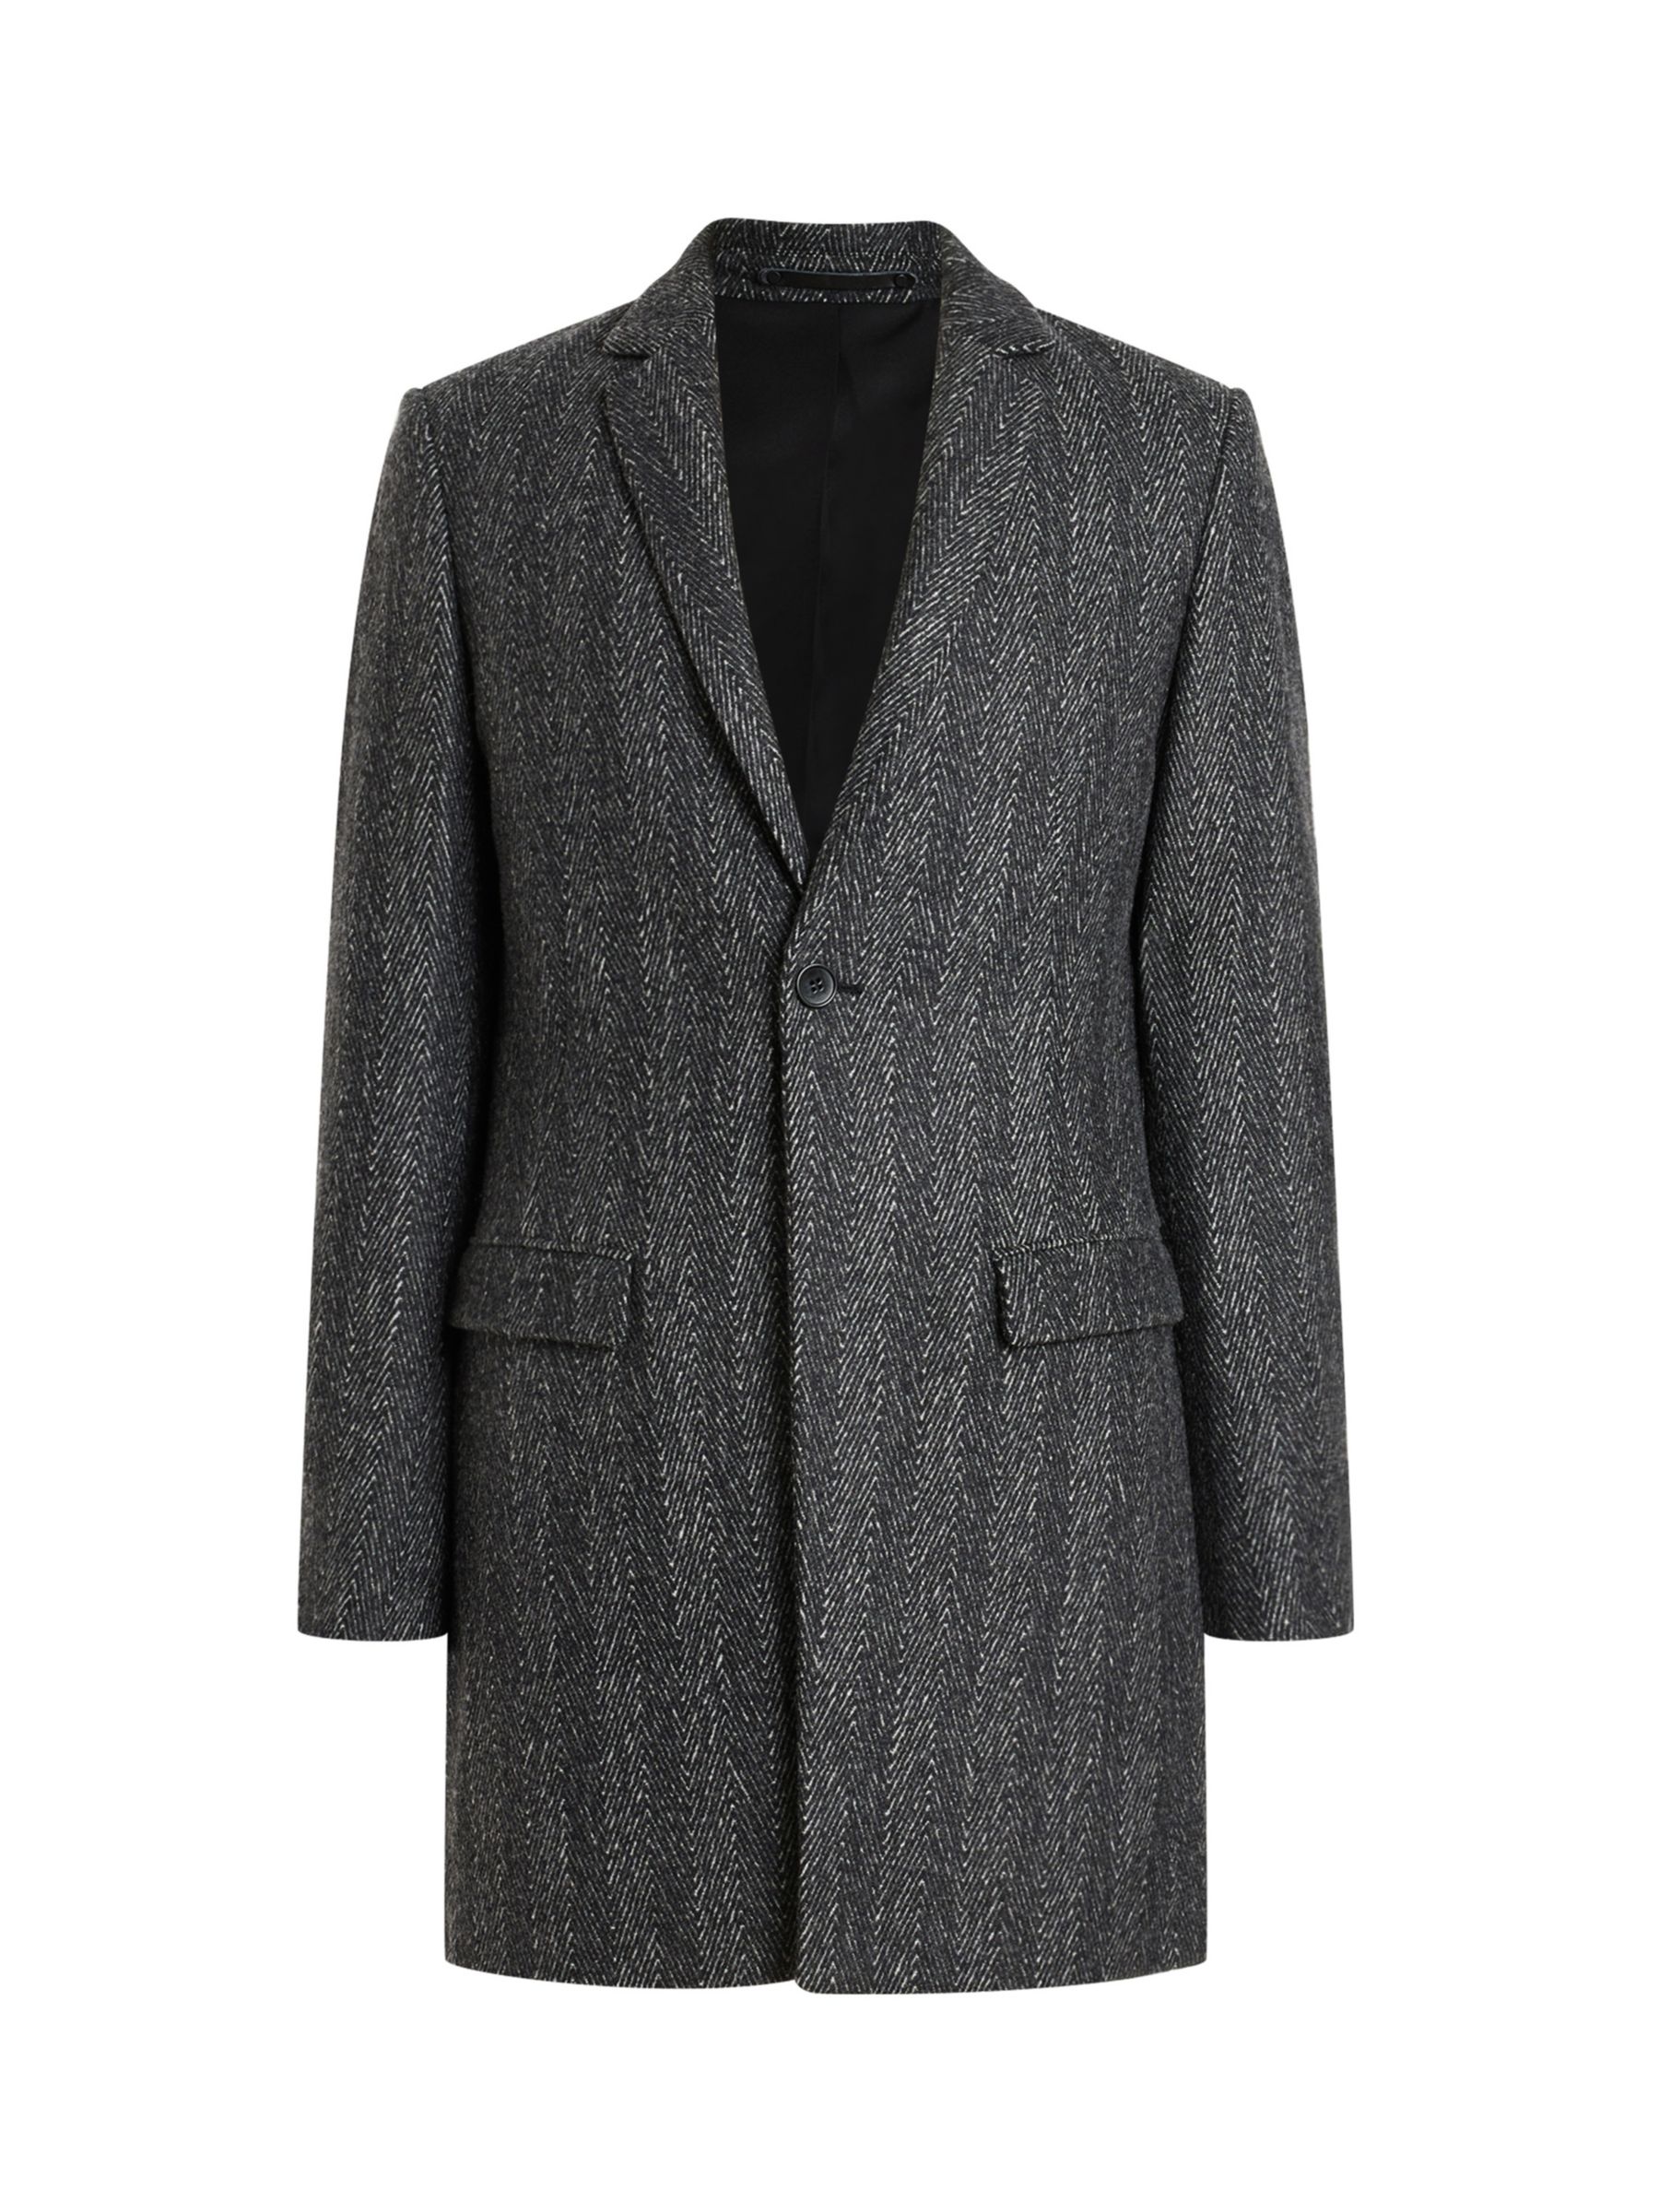 AllSaints Manor Herringbone Wool Coat, Black, 38R